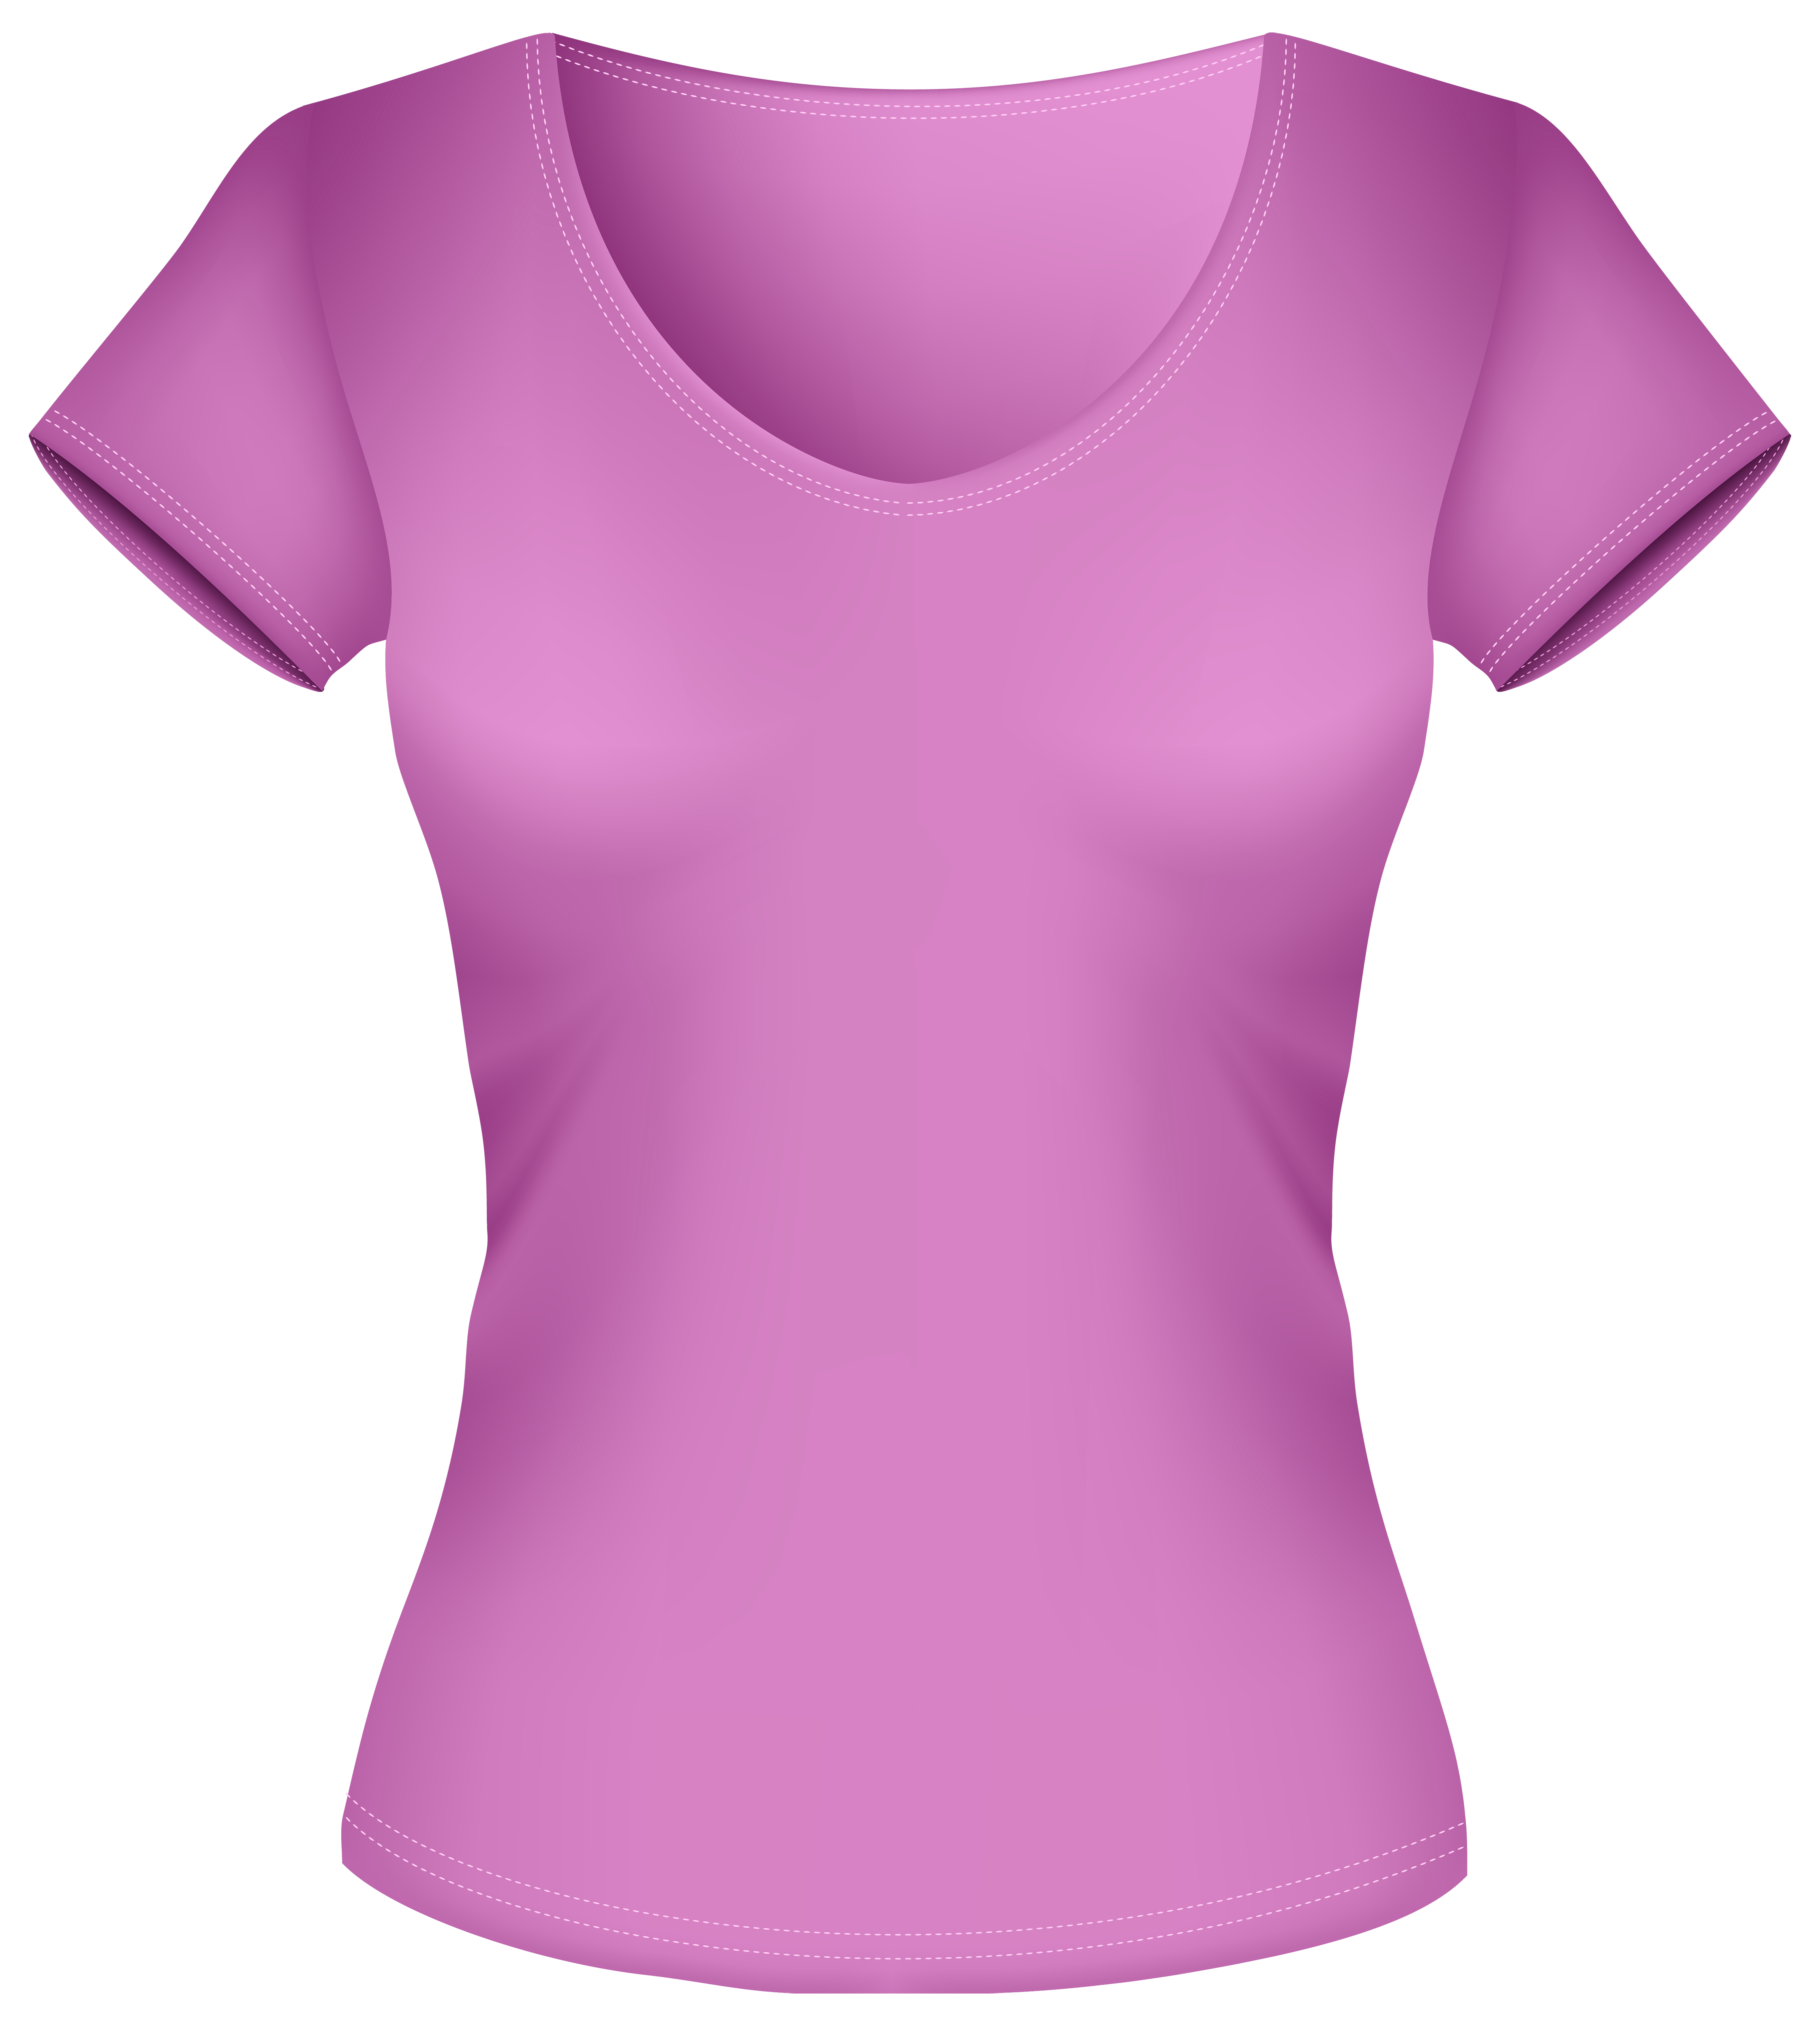 Women in transparent blouse. Shirt clipart purple shirt